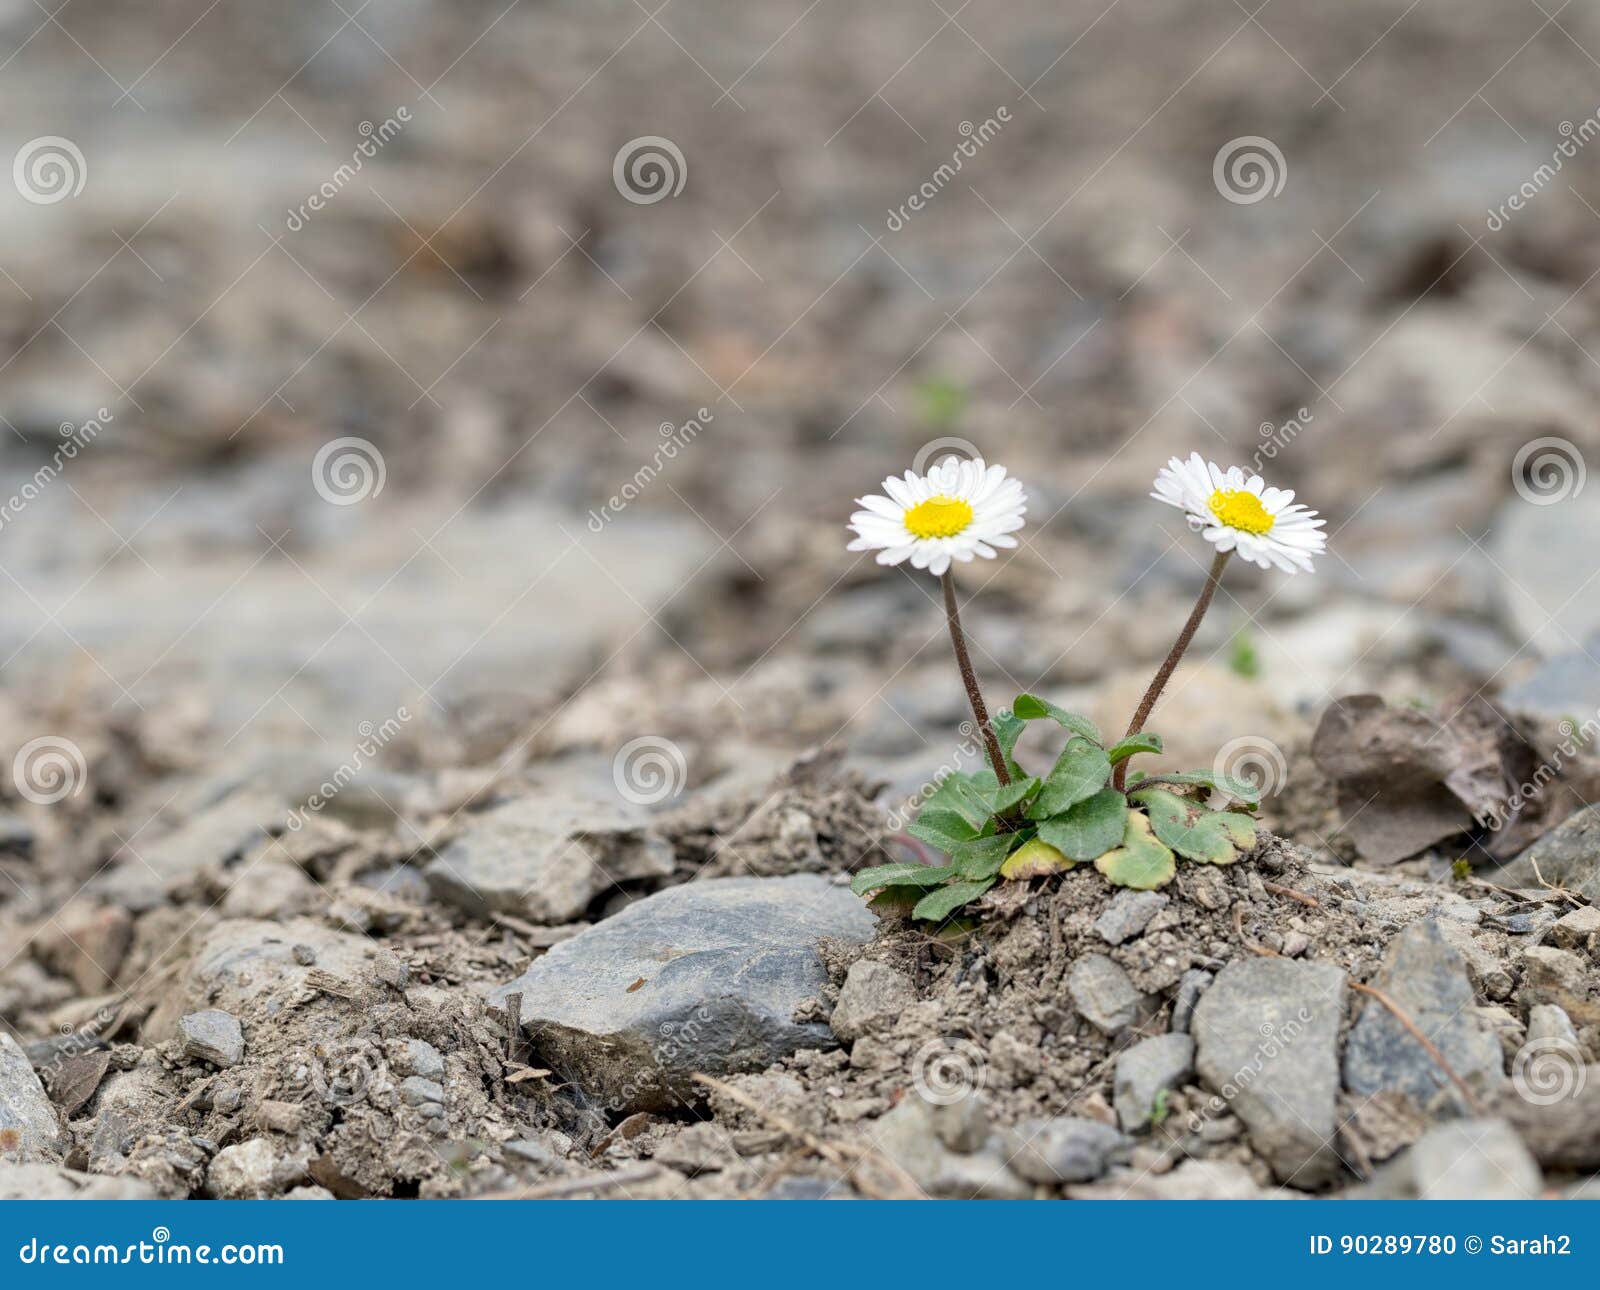 two wild daisy survivors, on stony ground.